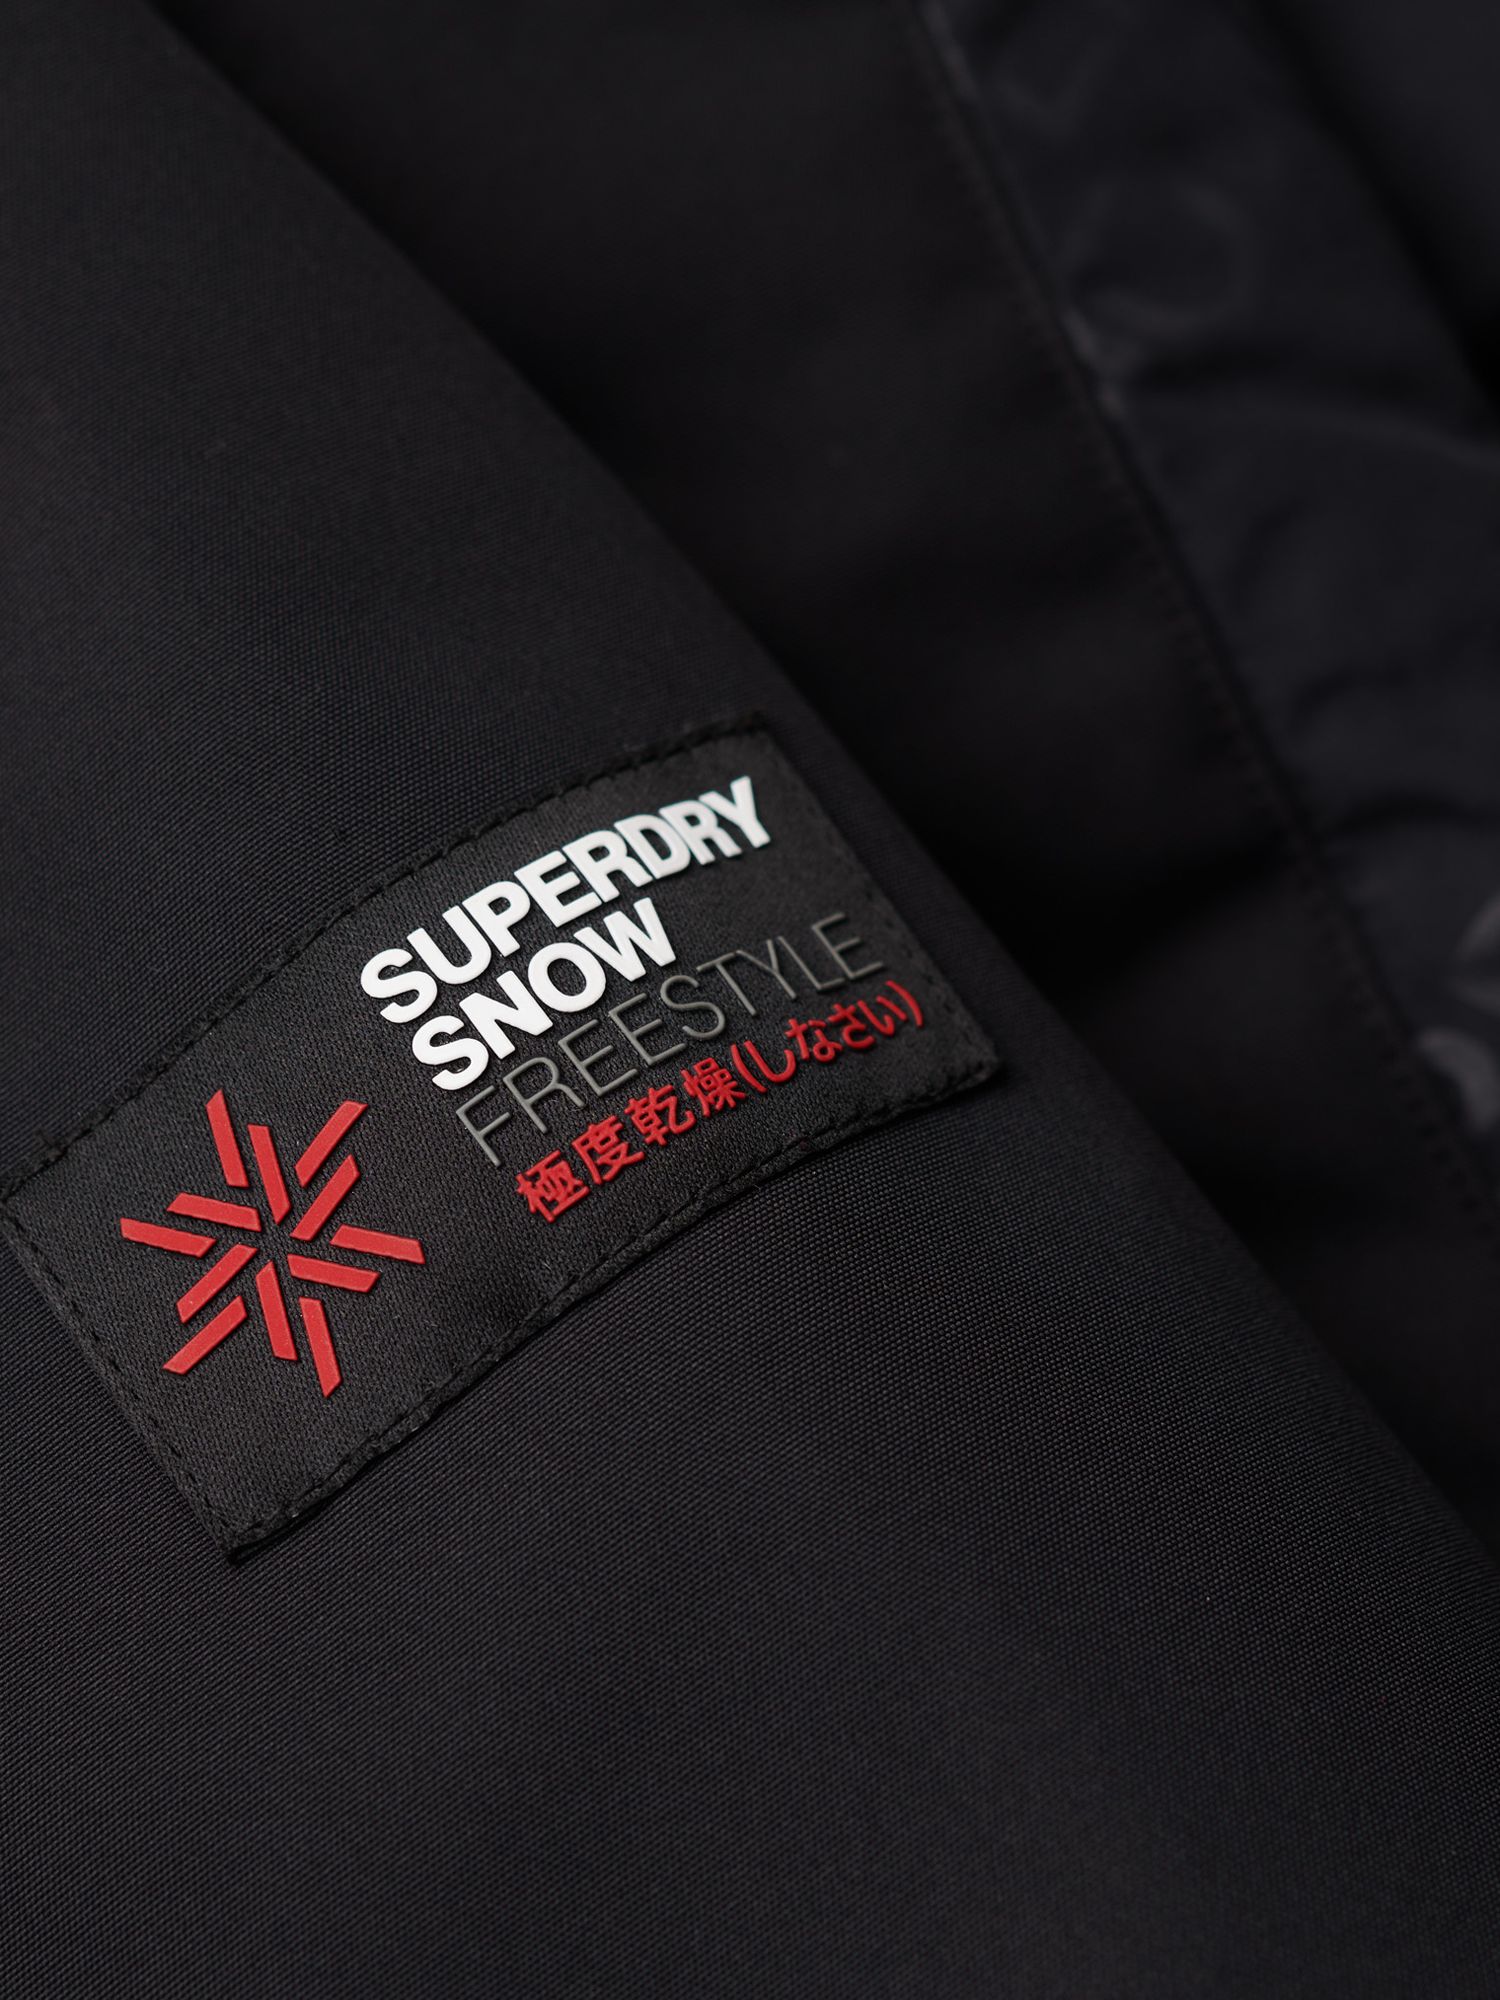 Superdry Freestyle Core Ski Jacket, Black at John Lewis & Partners